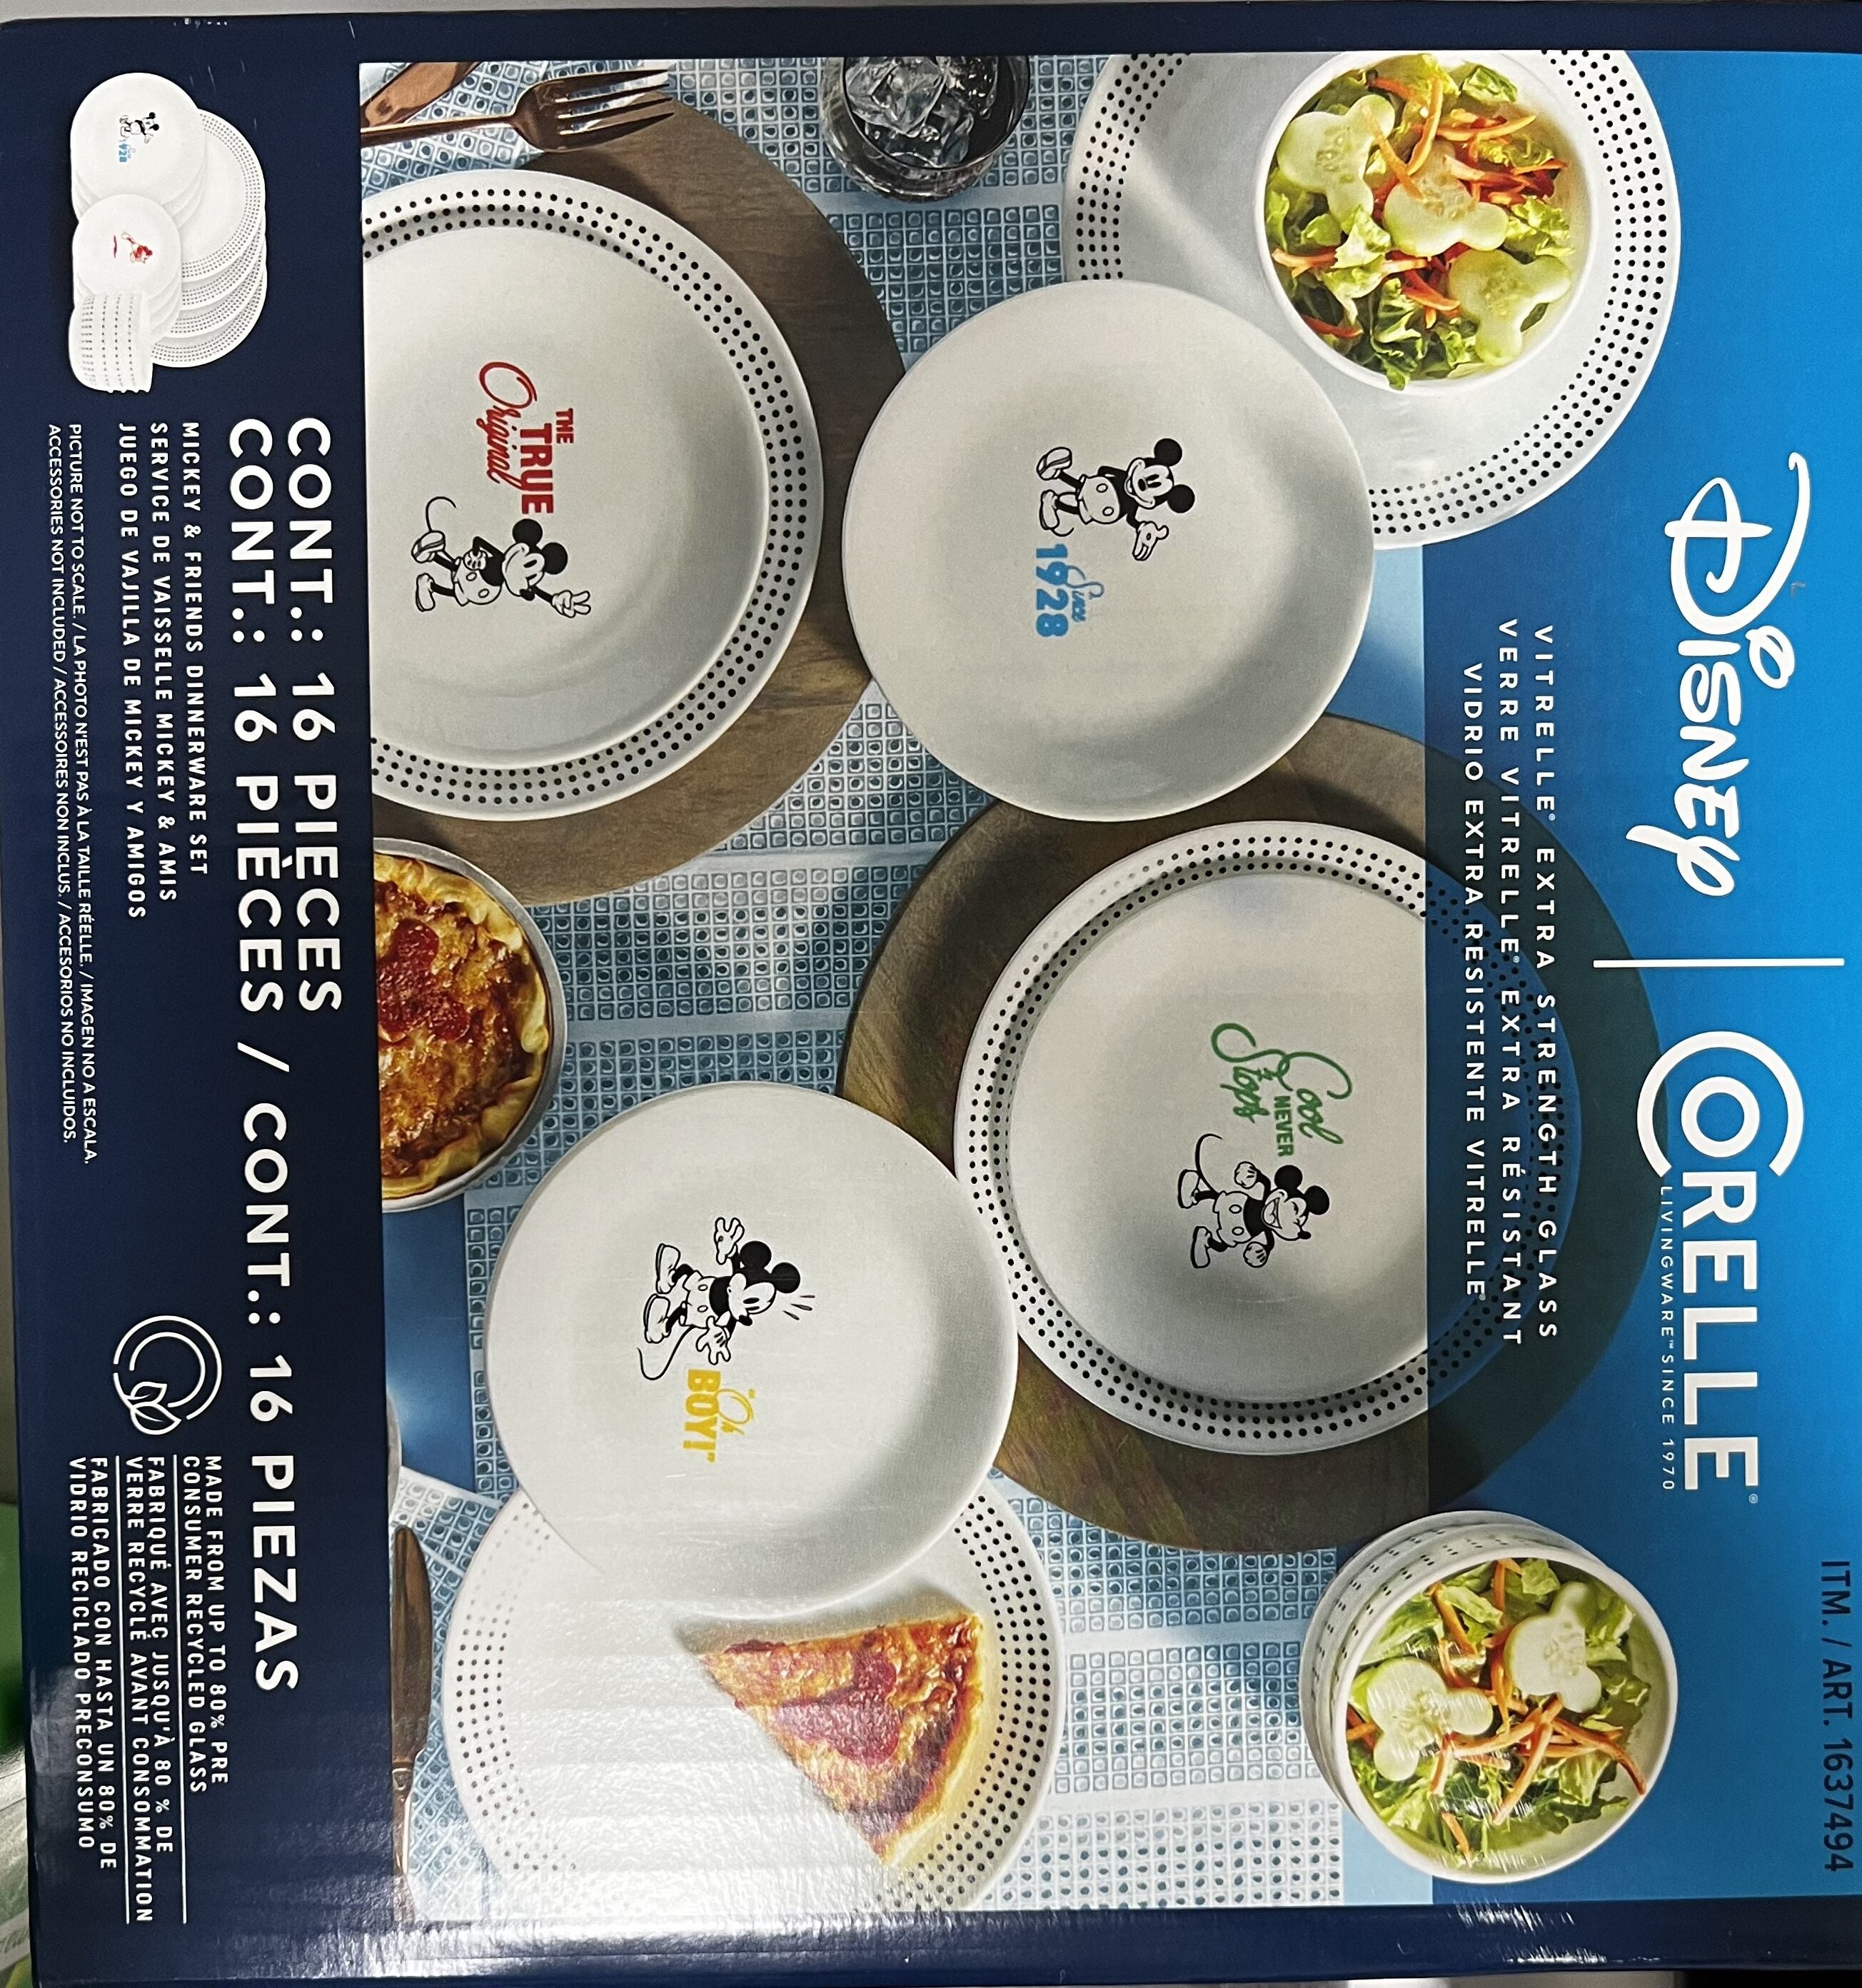 Disney Corelle 16-Piece Dinnerware Set Only $29.97 at Costco